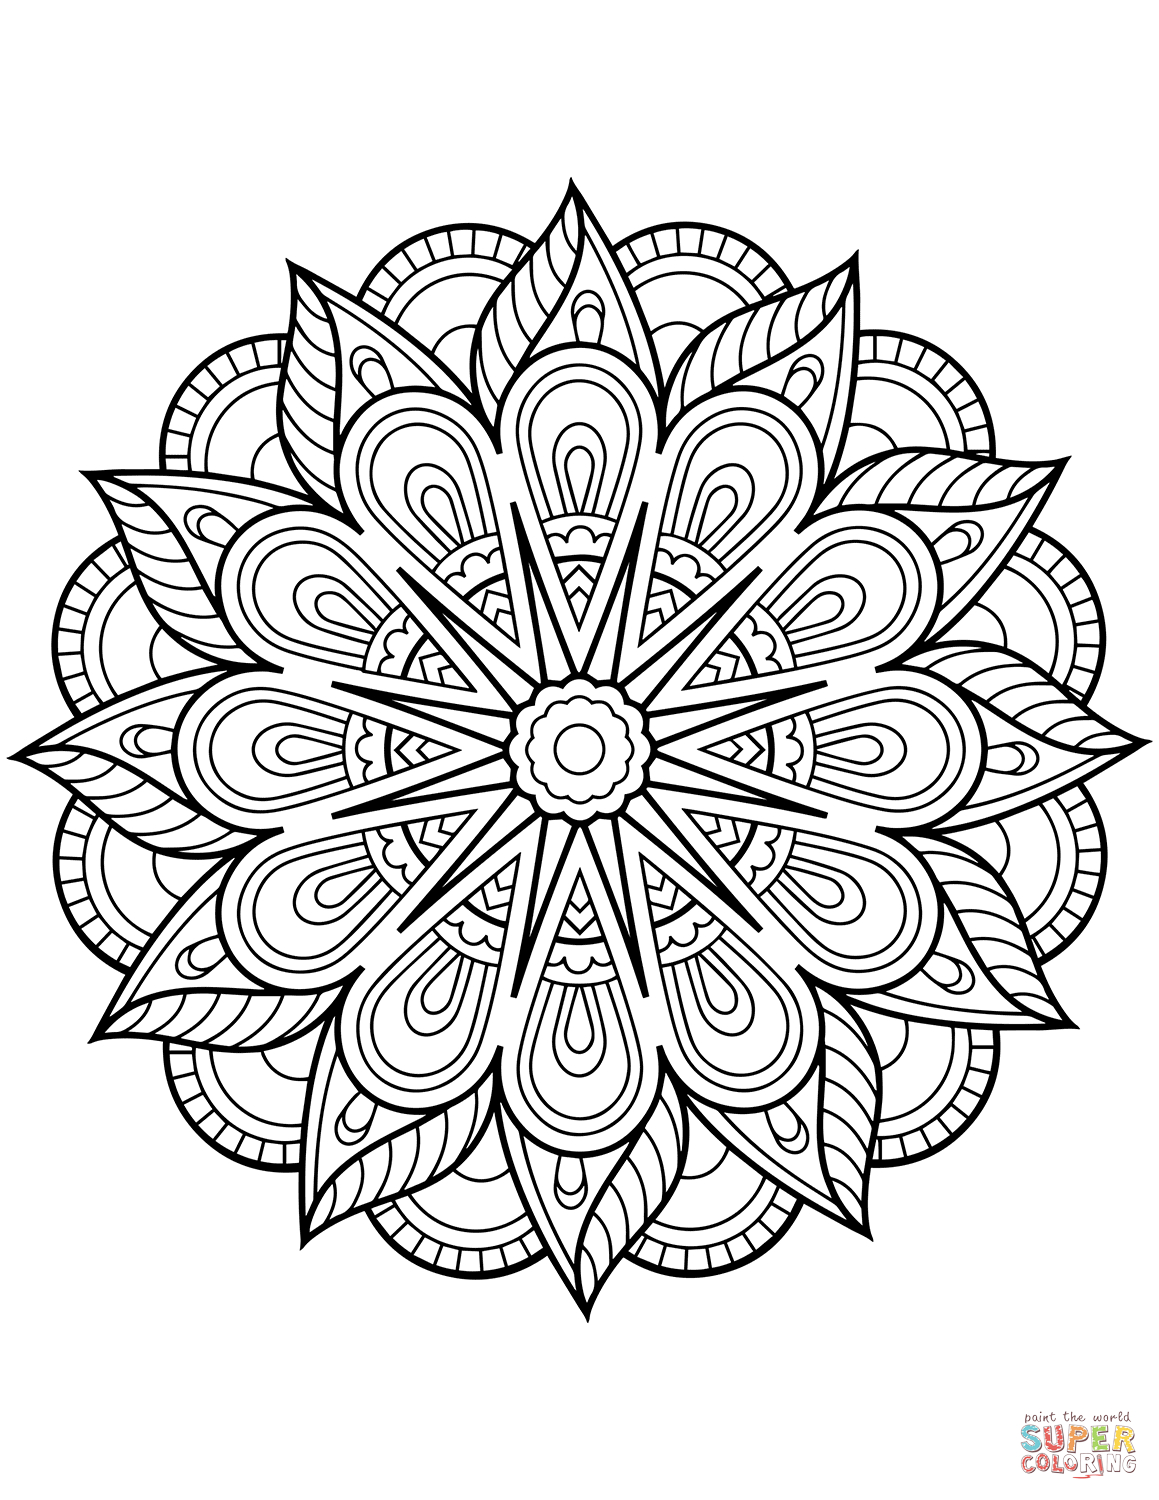 Flower Mandala Coloring Page Free Printable Coloring Pages | Line - Free Printable Mandala Patterns